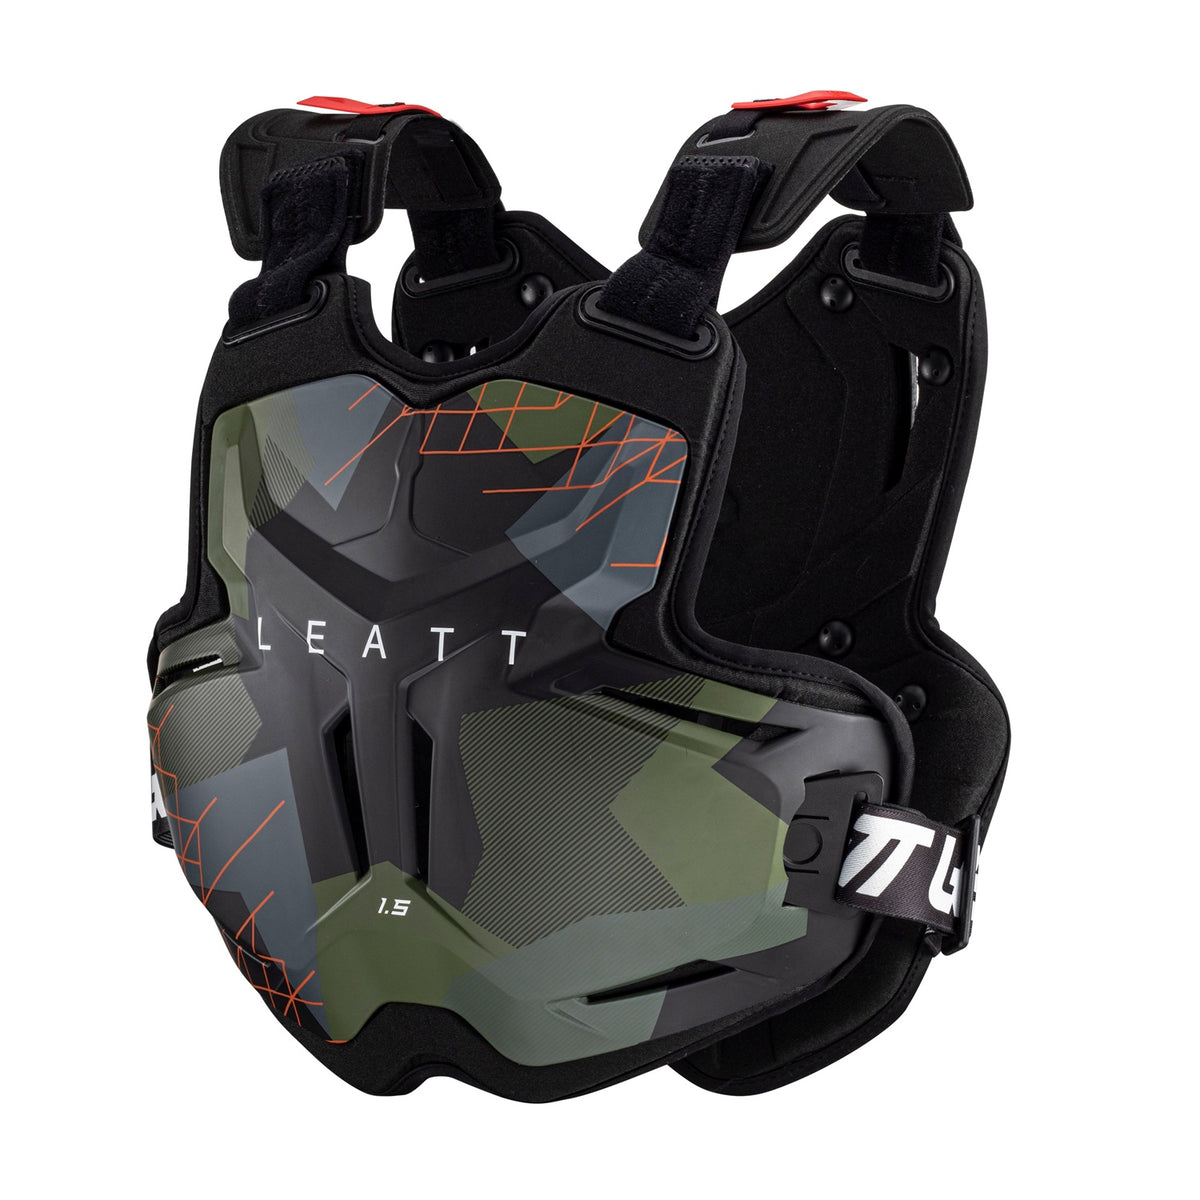 Leatt 1.5 Chest Protector